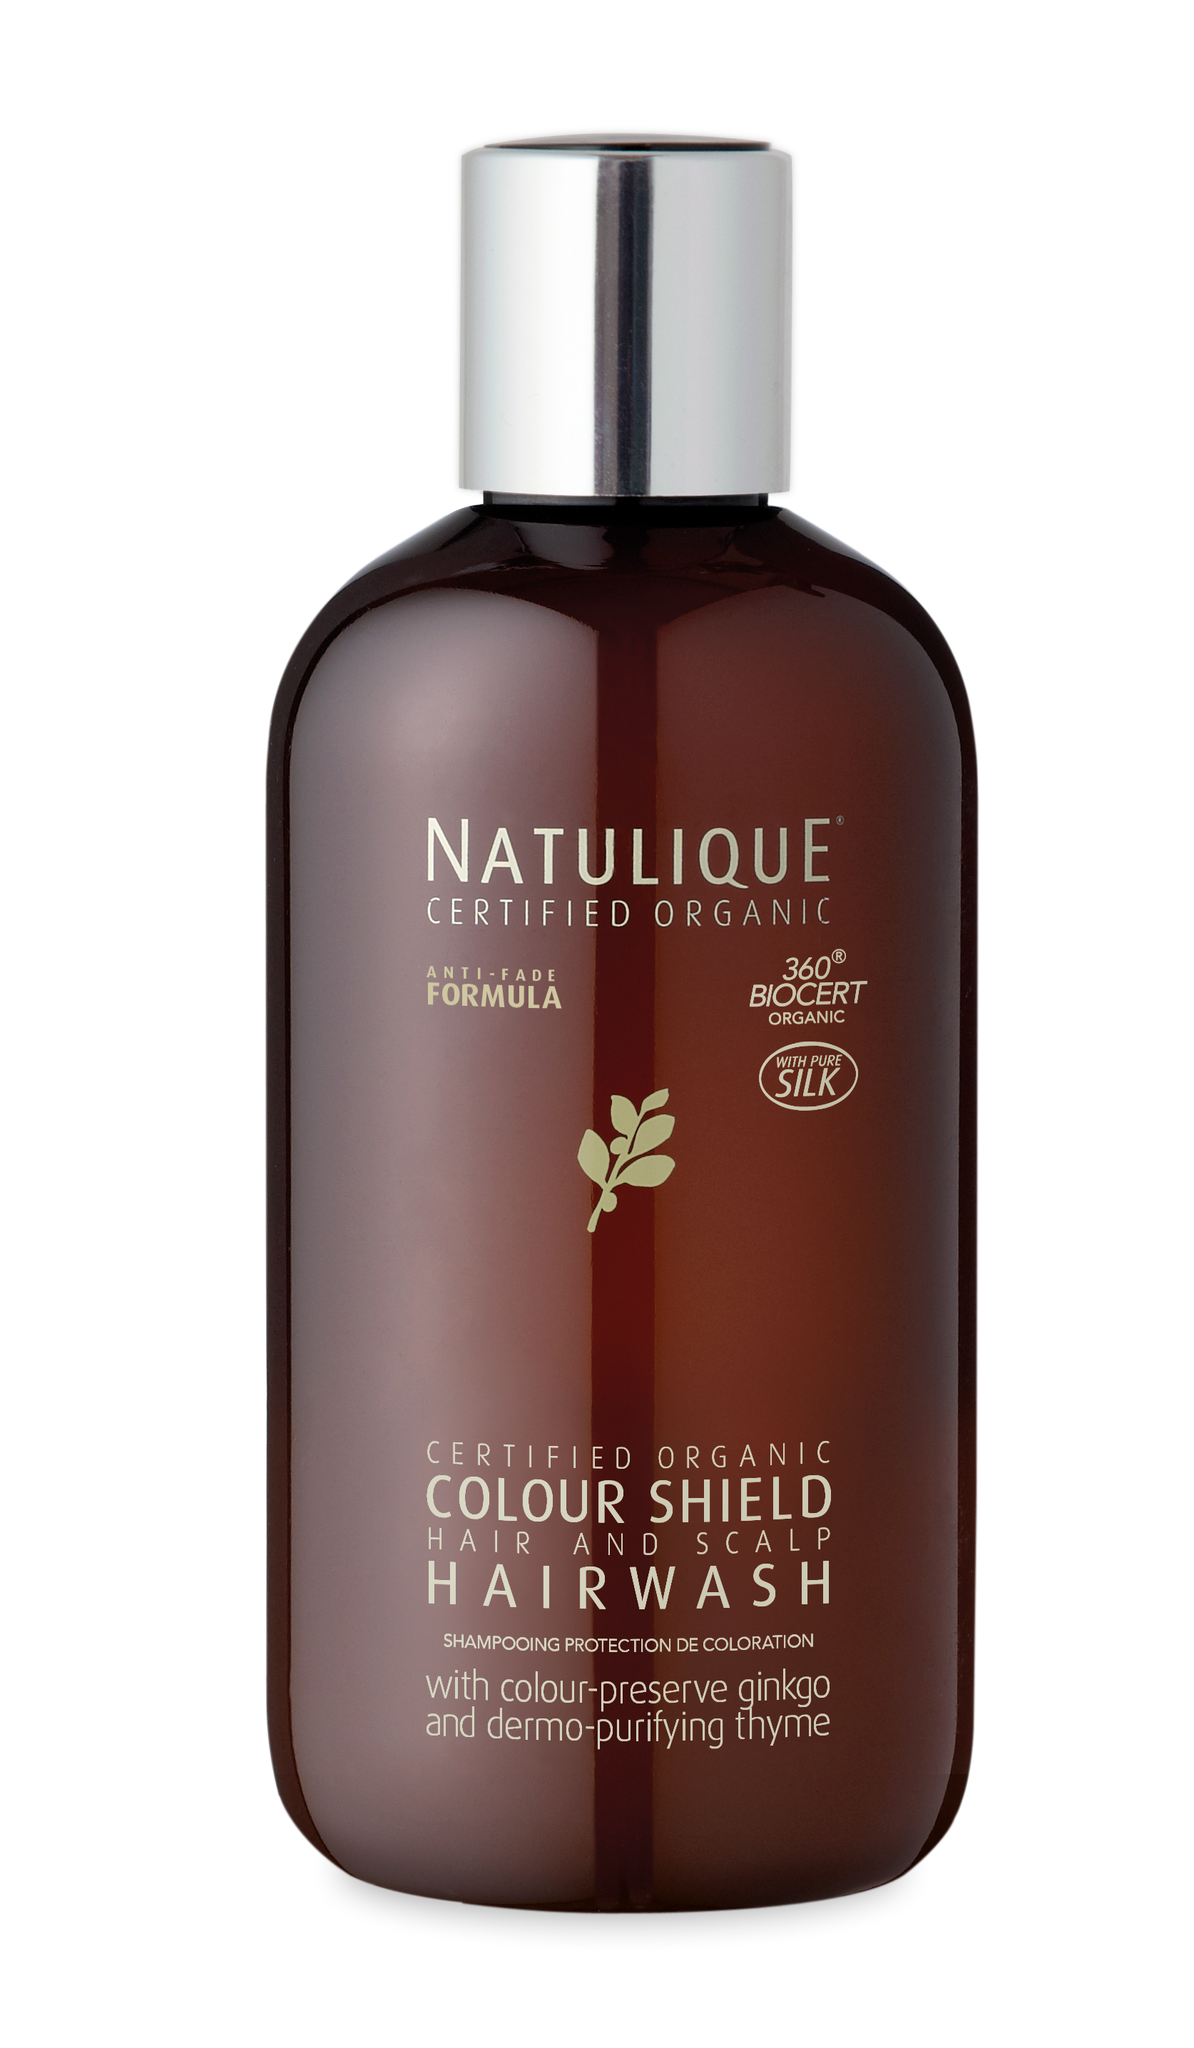 Natulique Colour Shield Hairwash